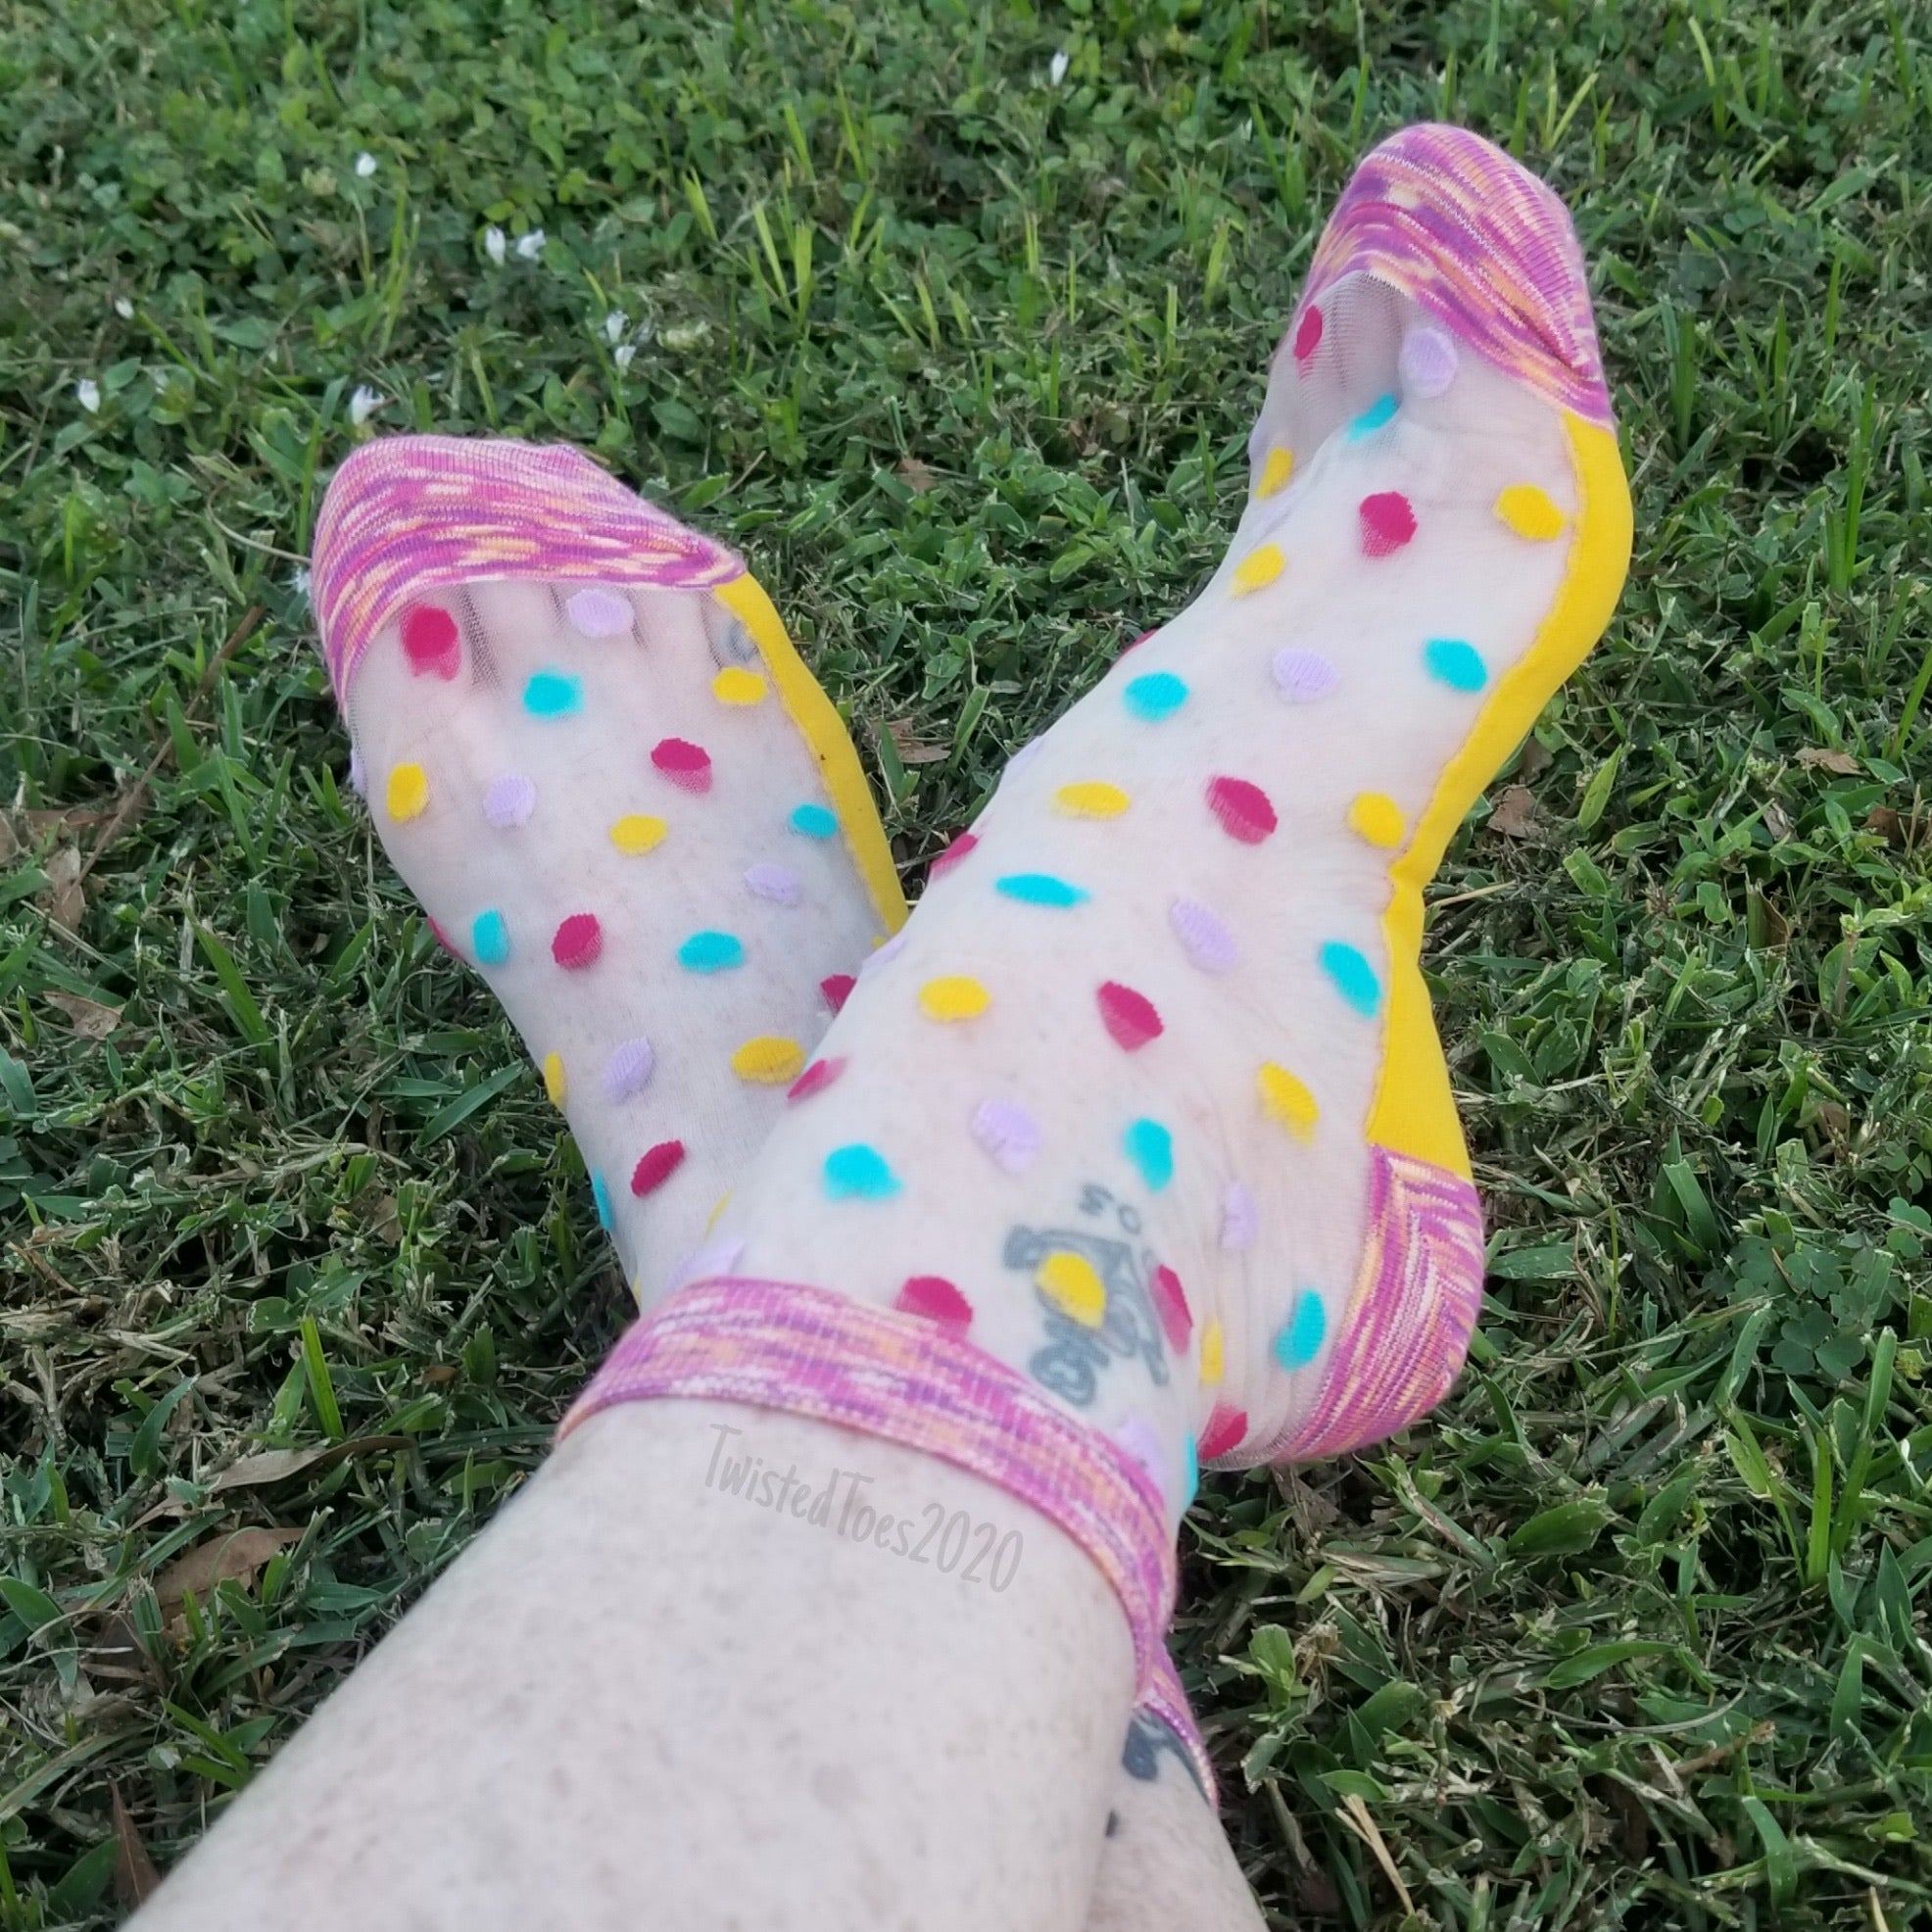 Bright Coloured Polka Sheer Socks